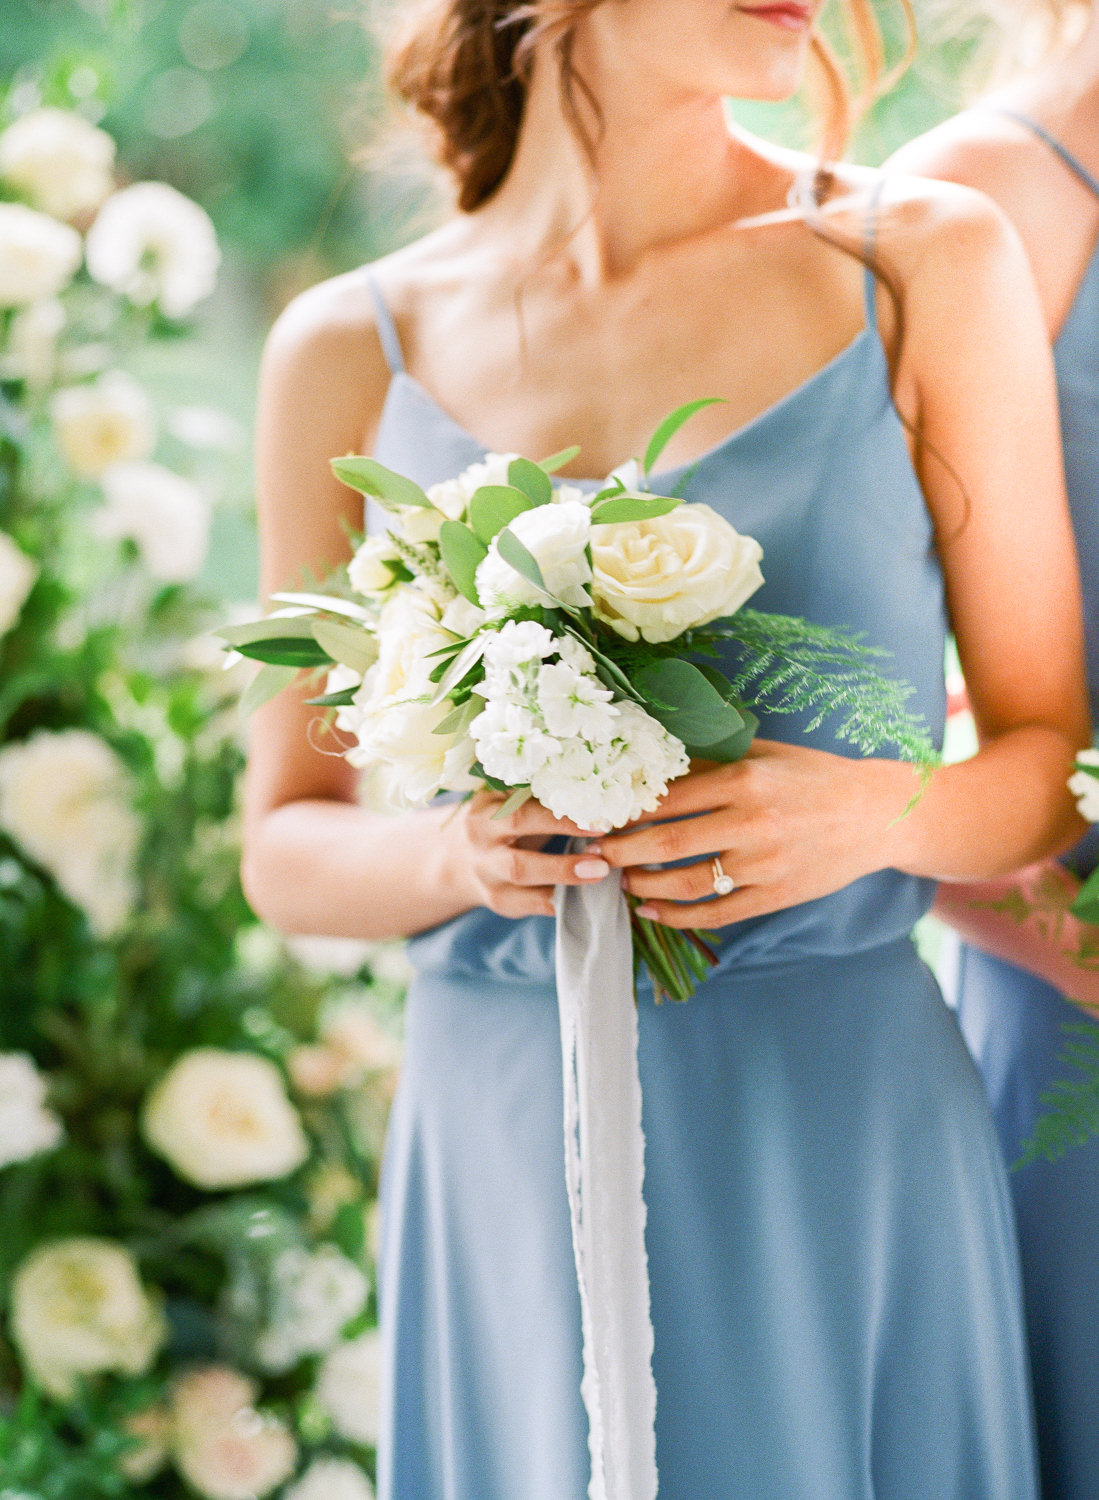 Norman's Bridal dusty blue bridesmaid dresses, Erica Robnett Photography